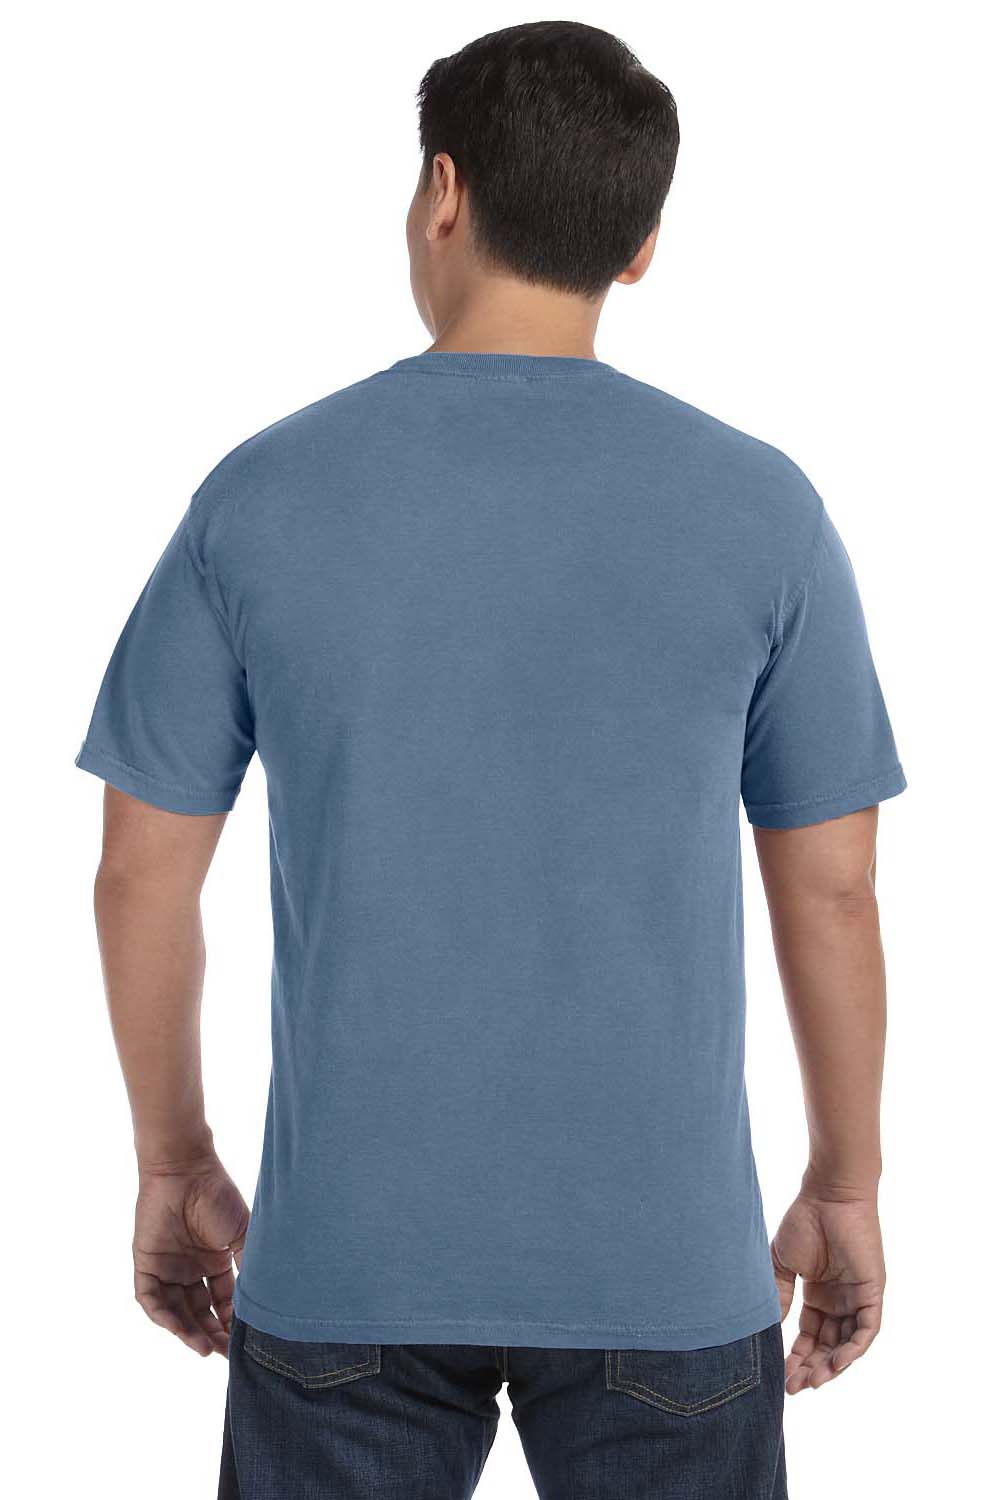 Comfort Colors C1717 Mens Short Sleeve Crewneck T-Shirt Blue Jean Back